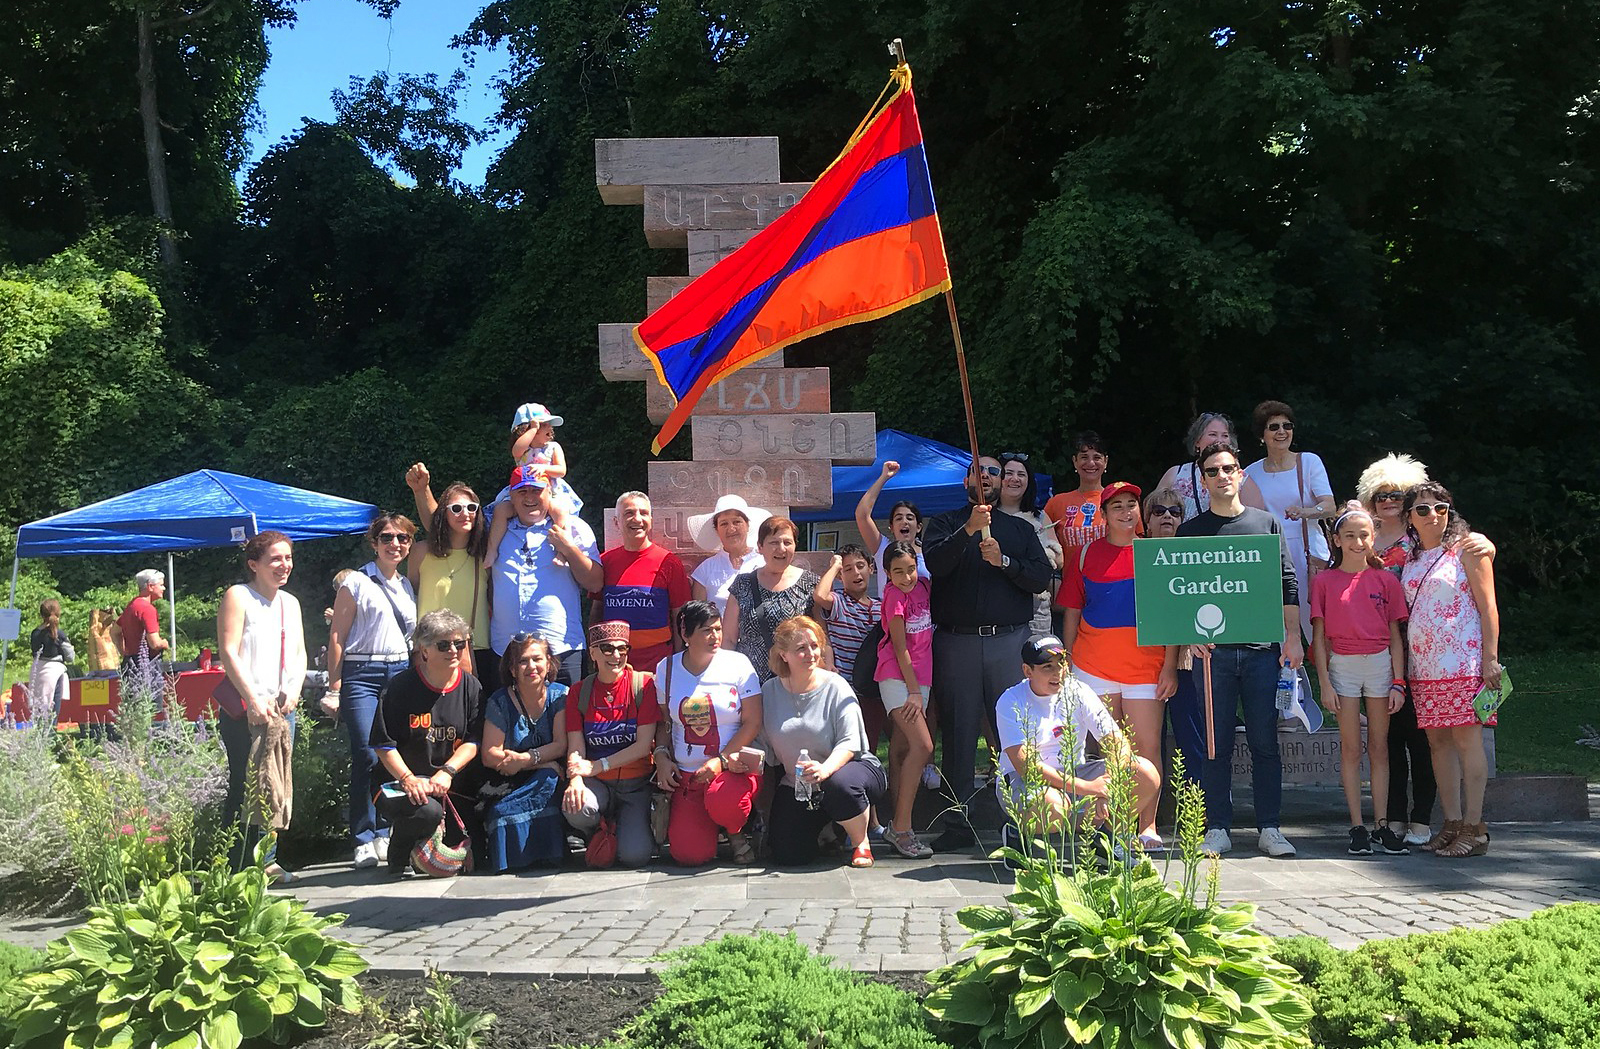 Armenian Cultural Garden in Ohio